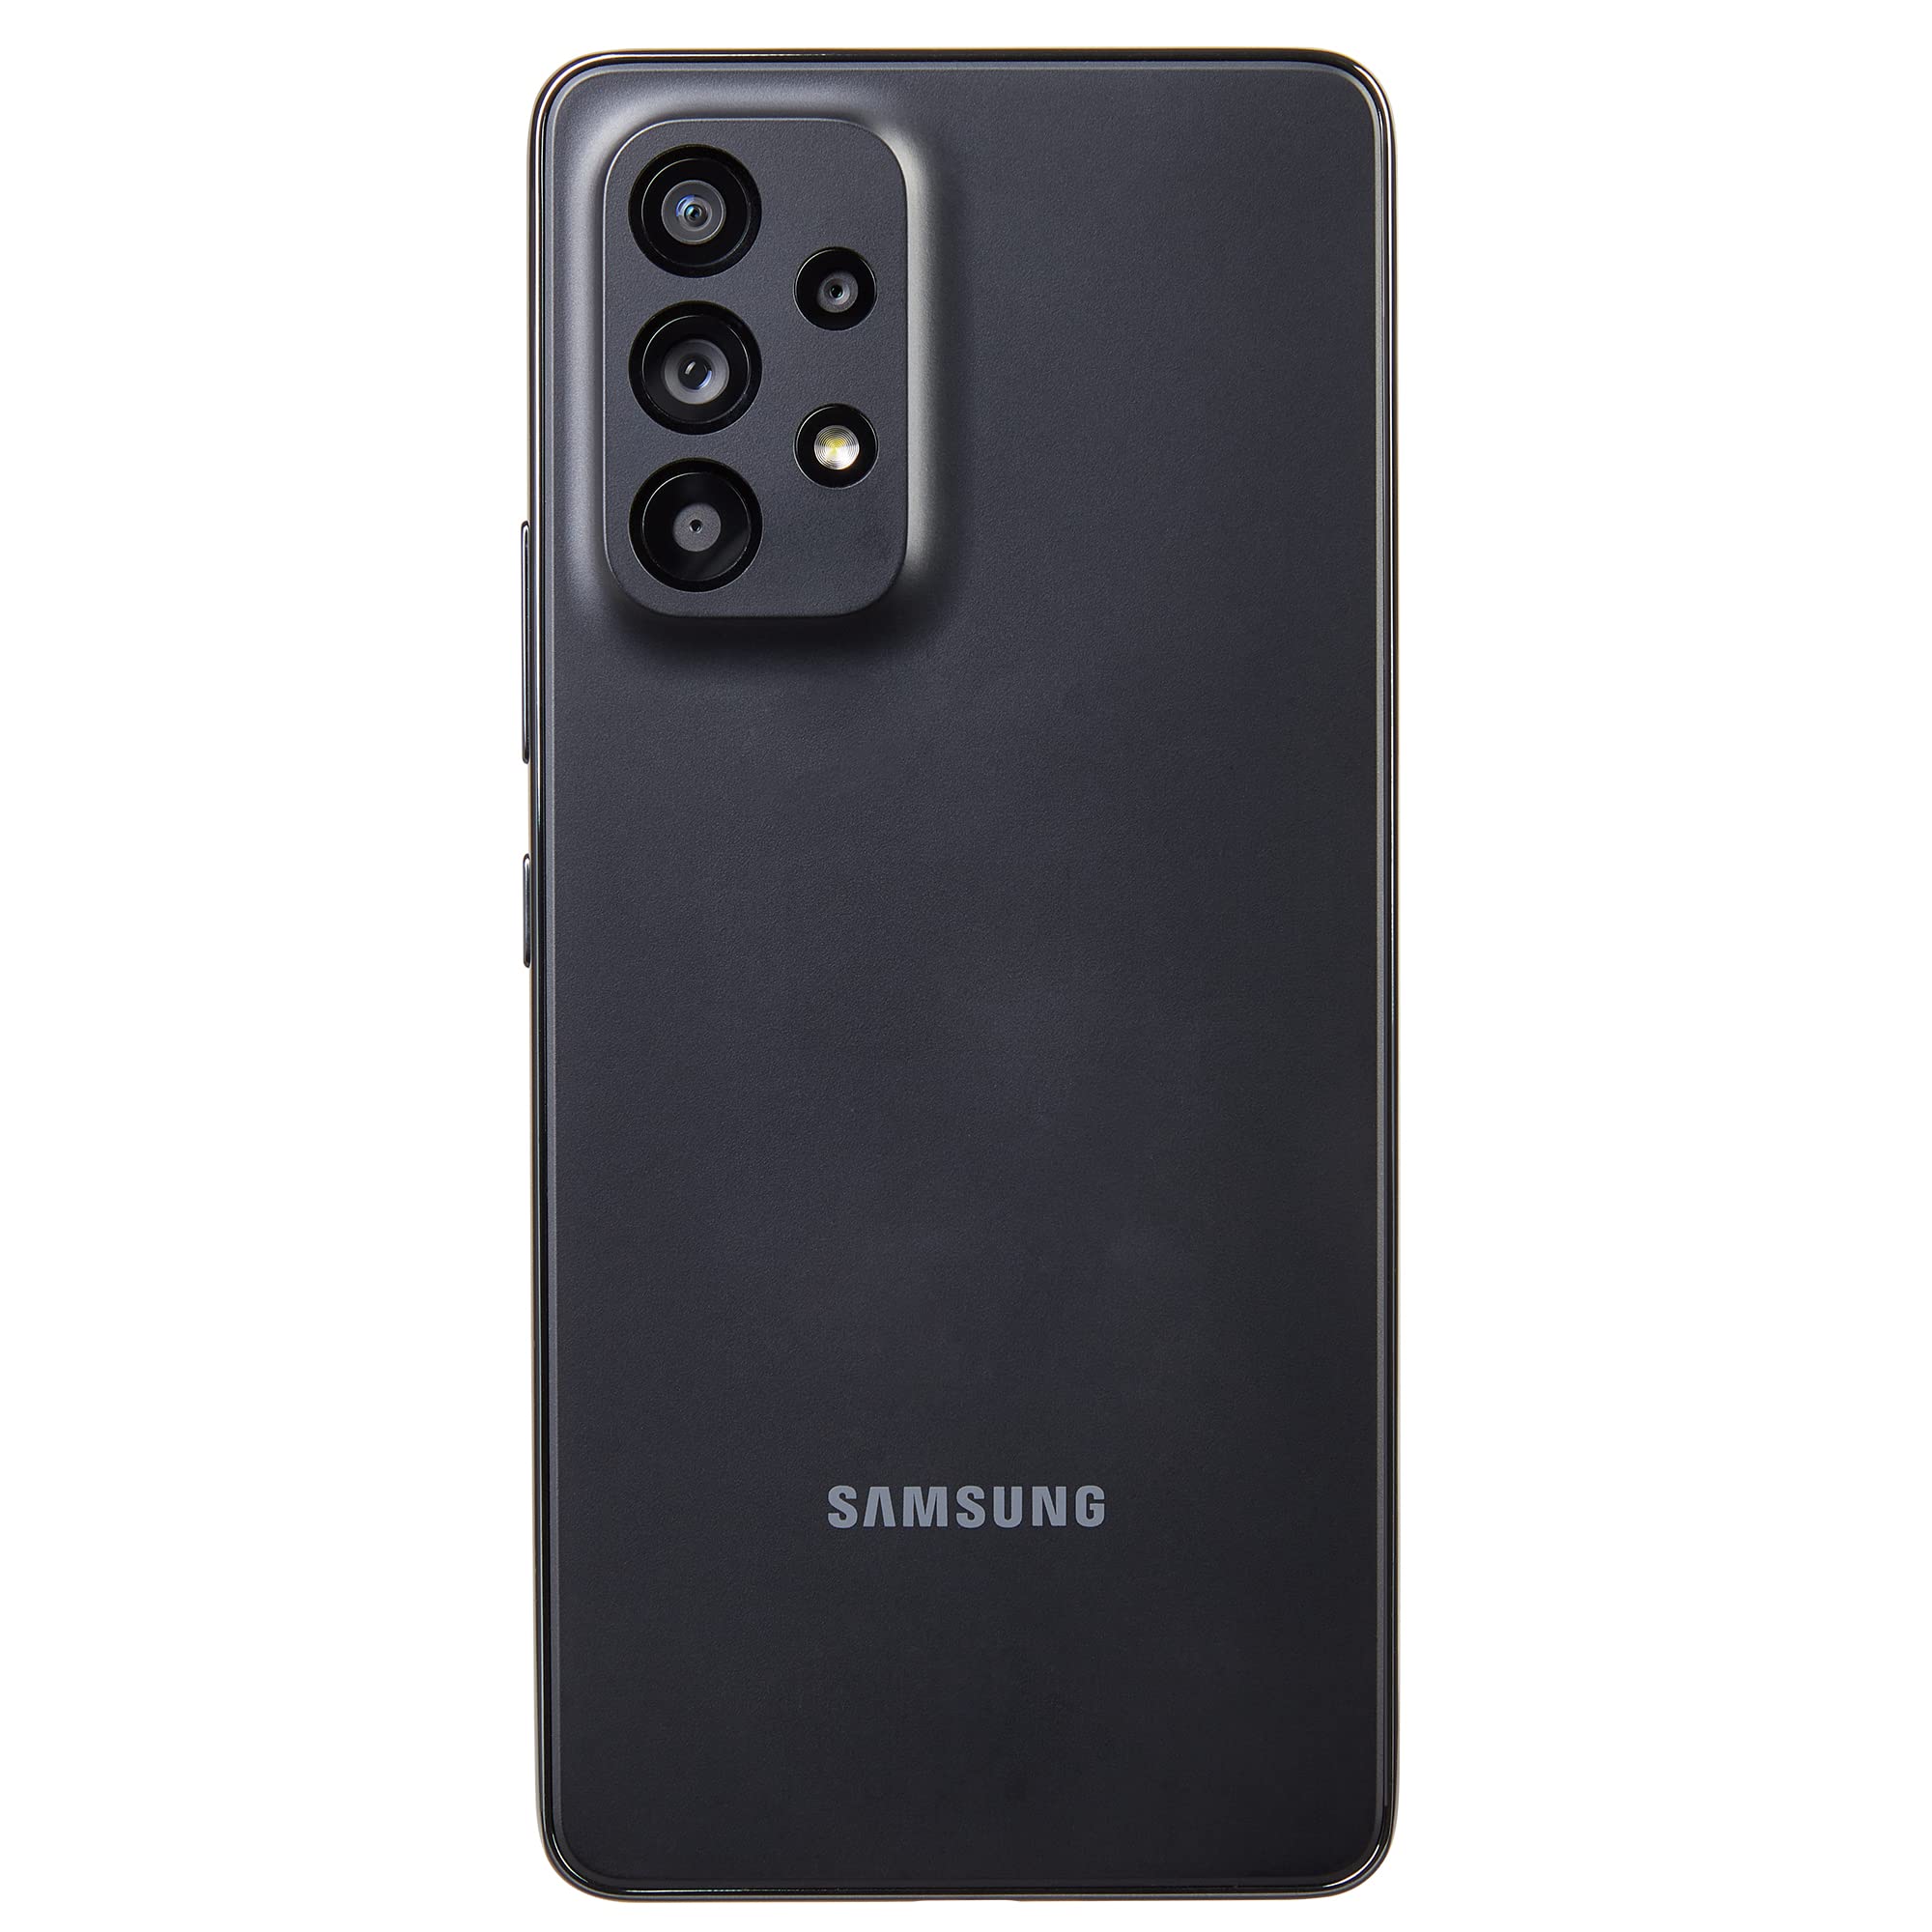 Total by Verizon Samsung Galaxy A53 5G, 128GB, Black - Prepaid Smartphone (Locked)